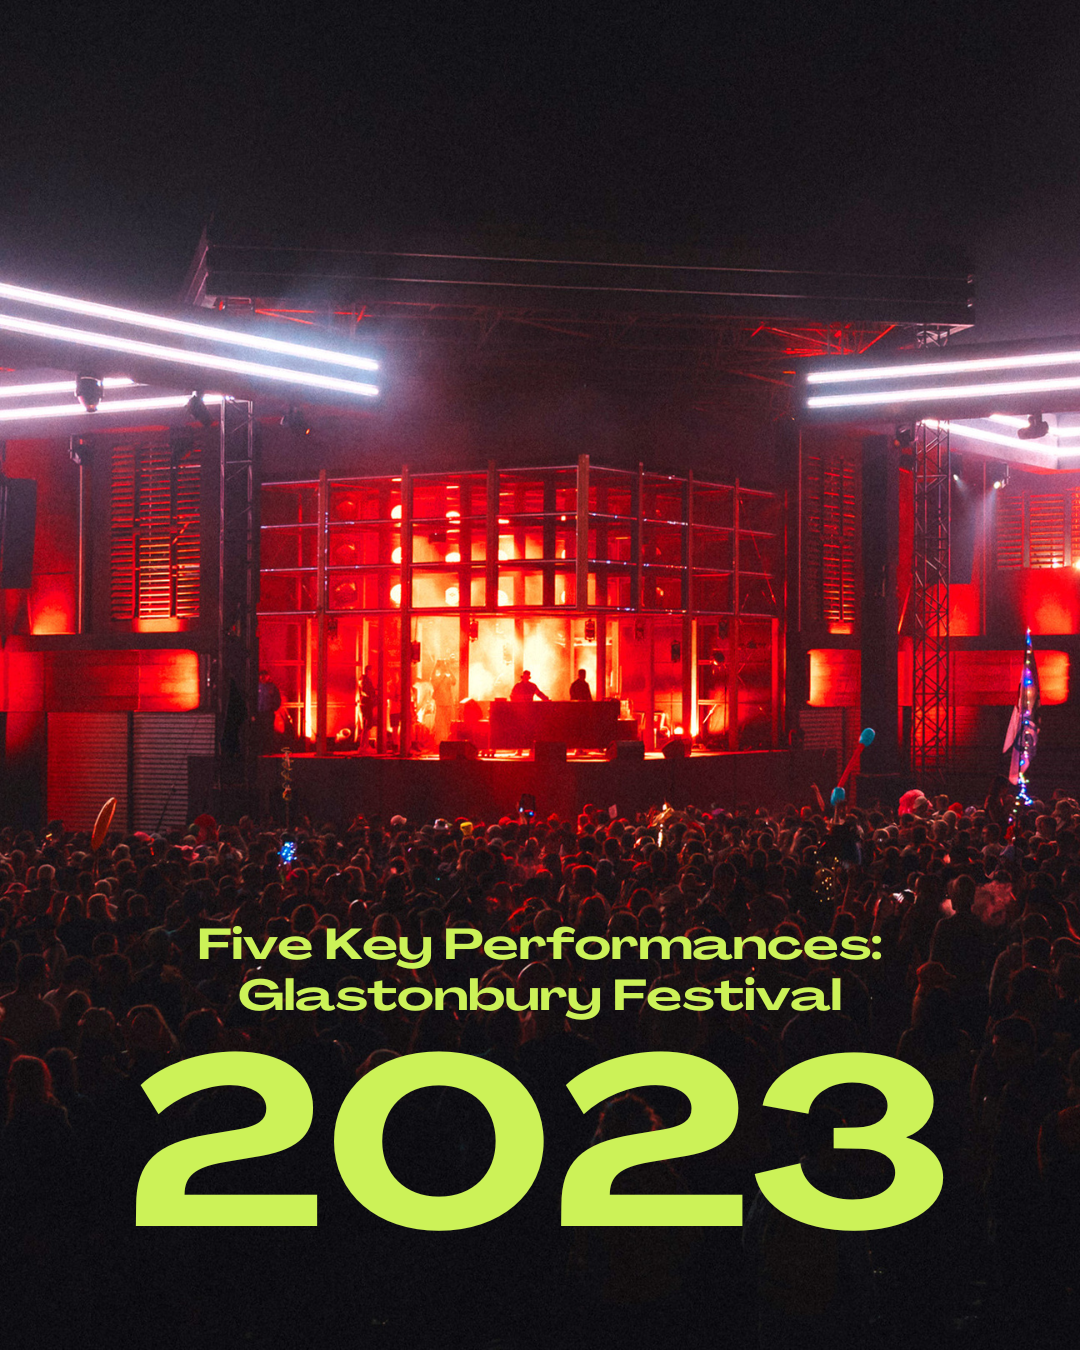 Five Key Performances:
Glastonbury Festival

2023